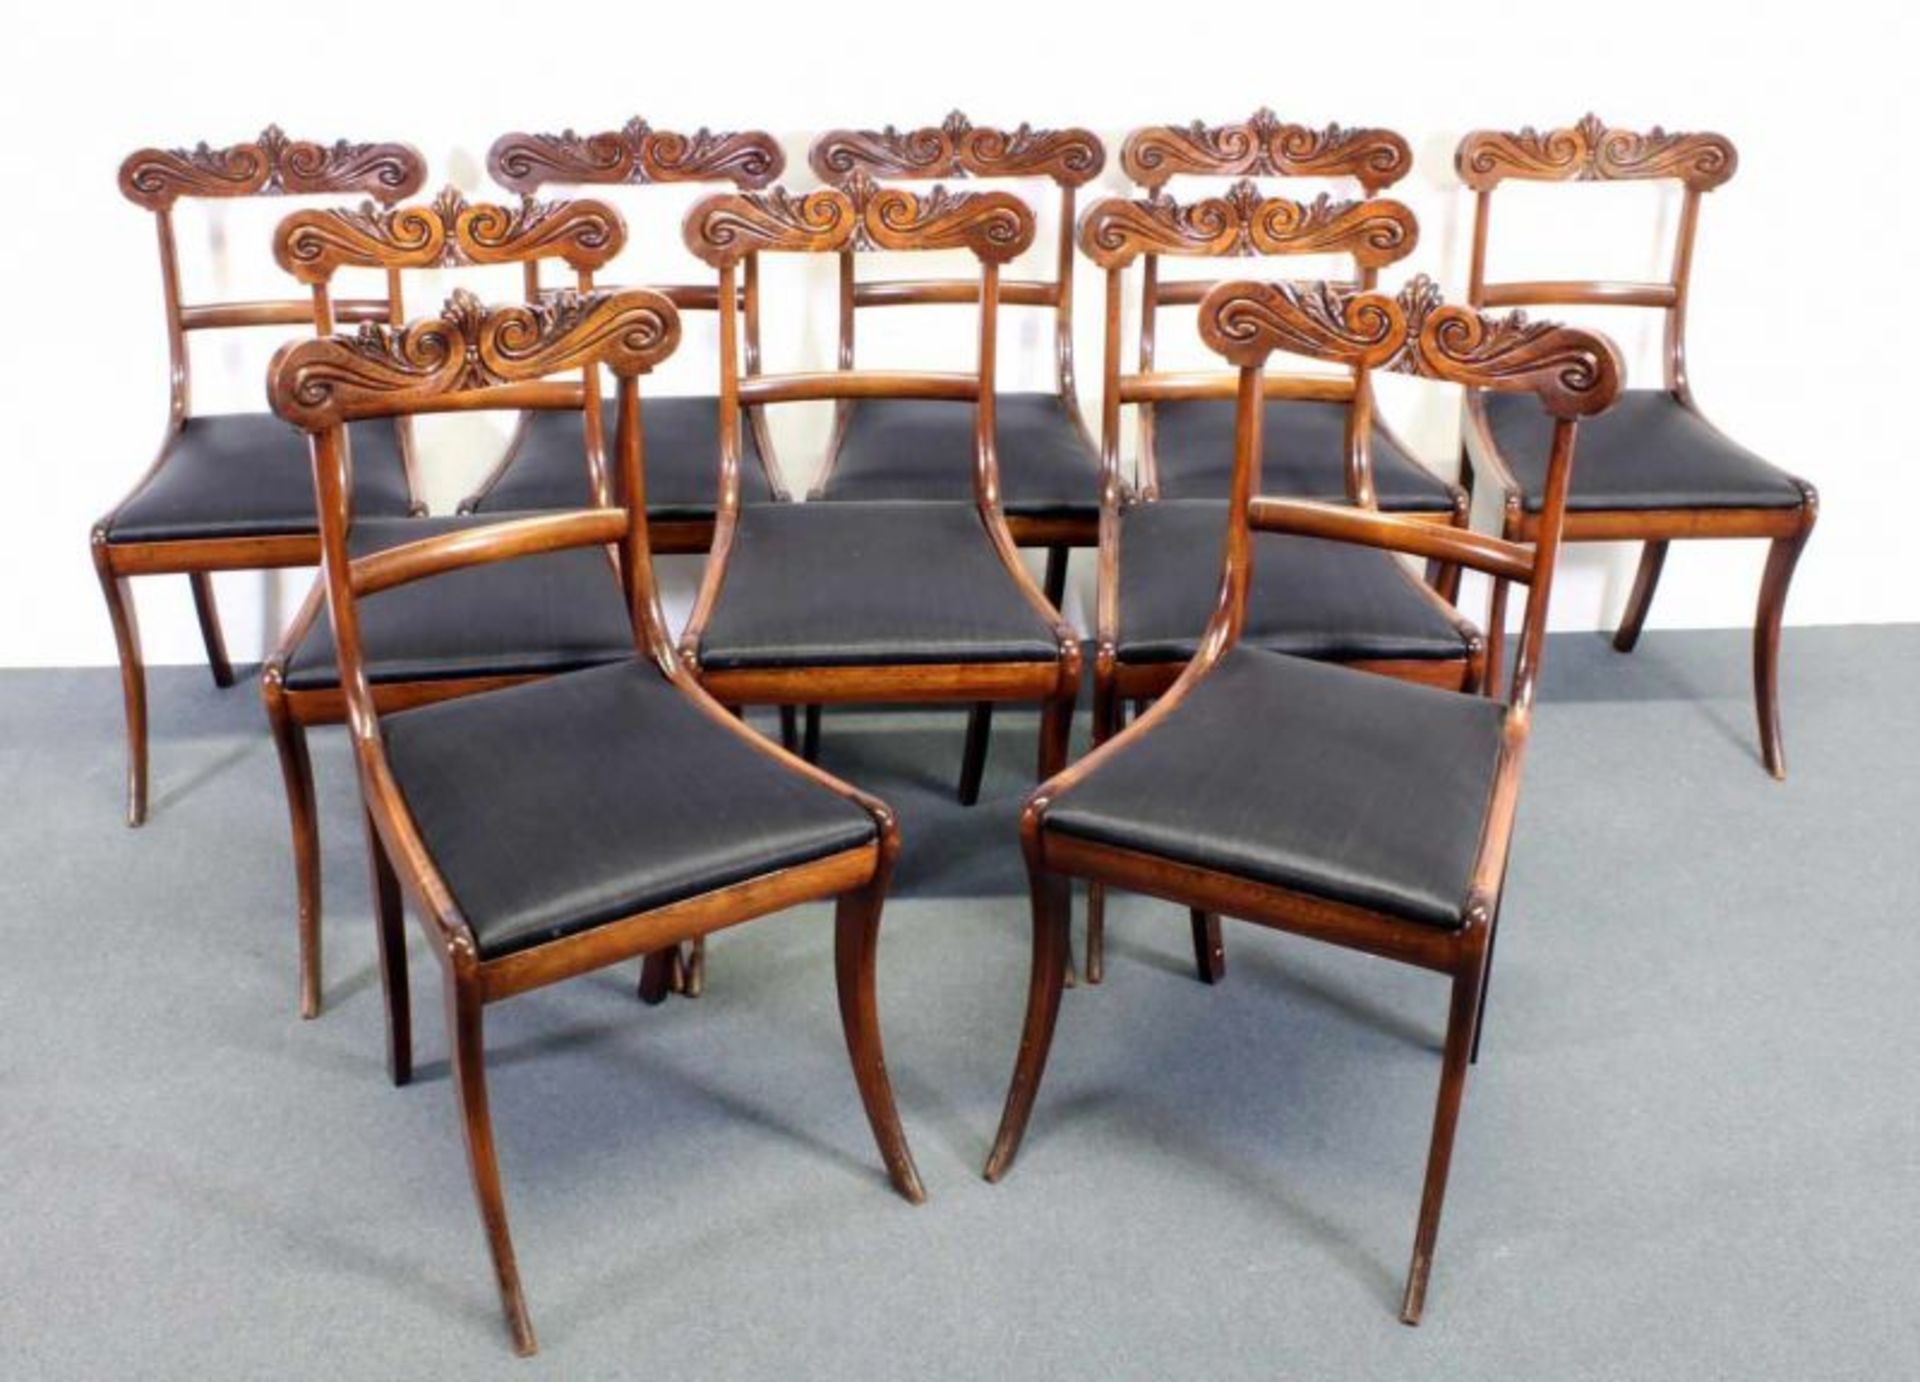 10 Stühle, England, Regency, um 1830, Mahagoni, loses Sitzpolster, geschnitzte Rückenzarge 20.00 %